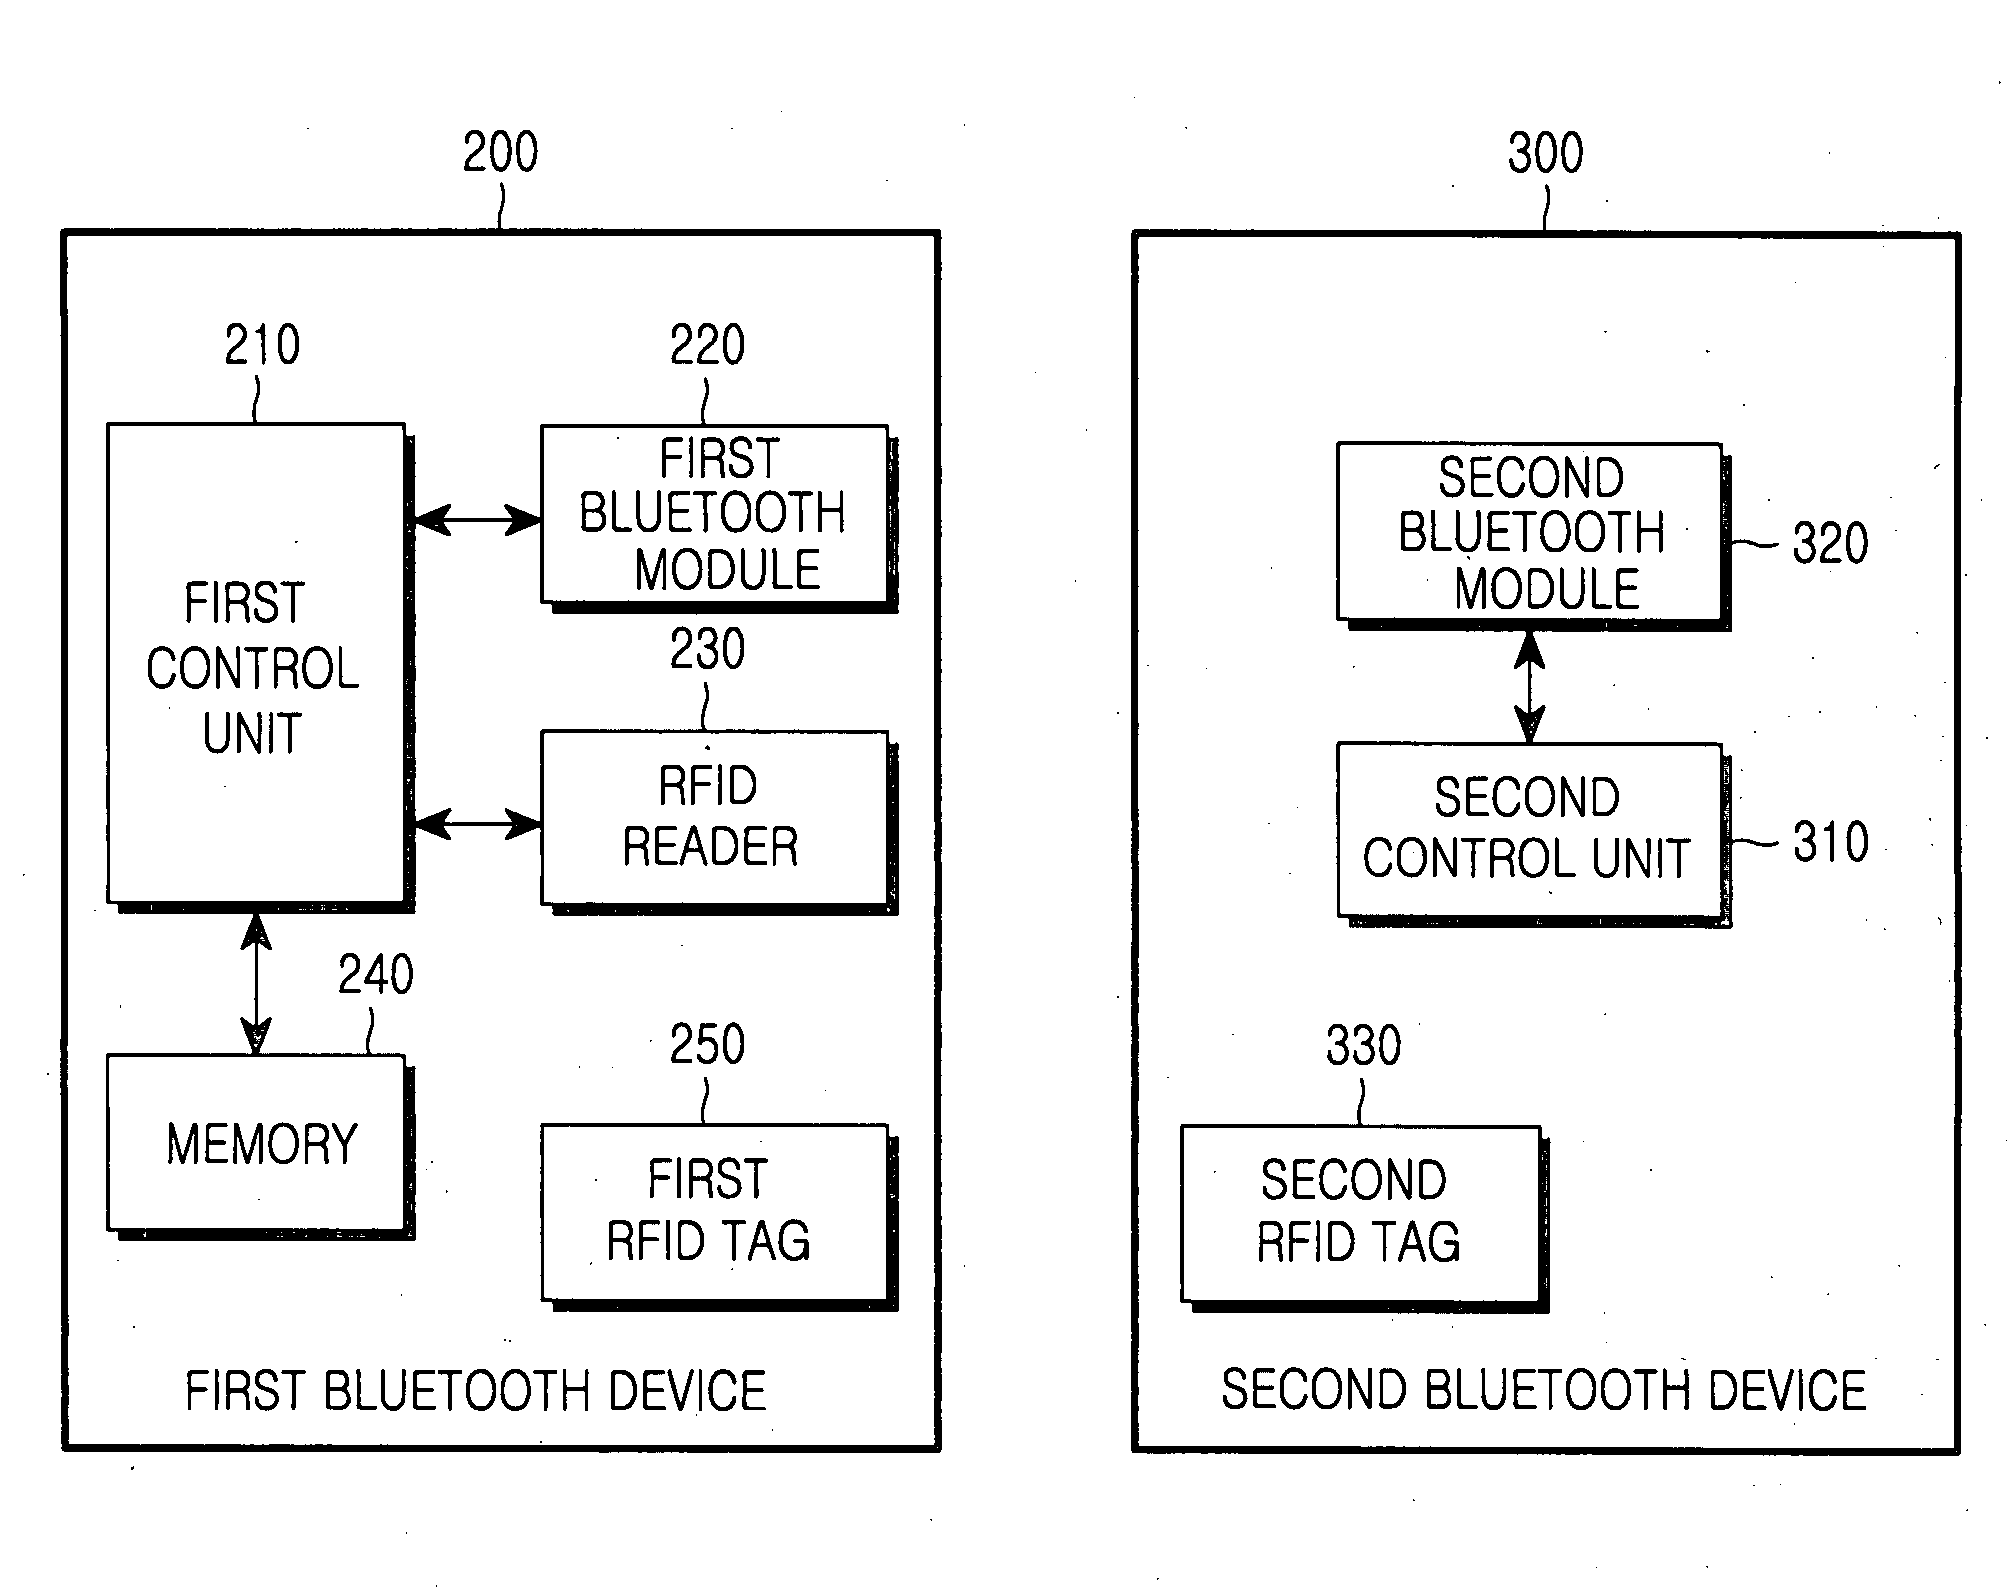 Bluetooth(R) system and Bluetooth(R) bonding process